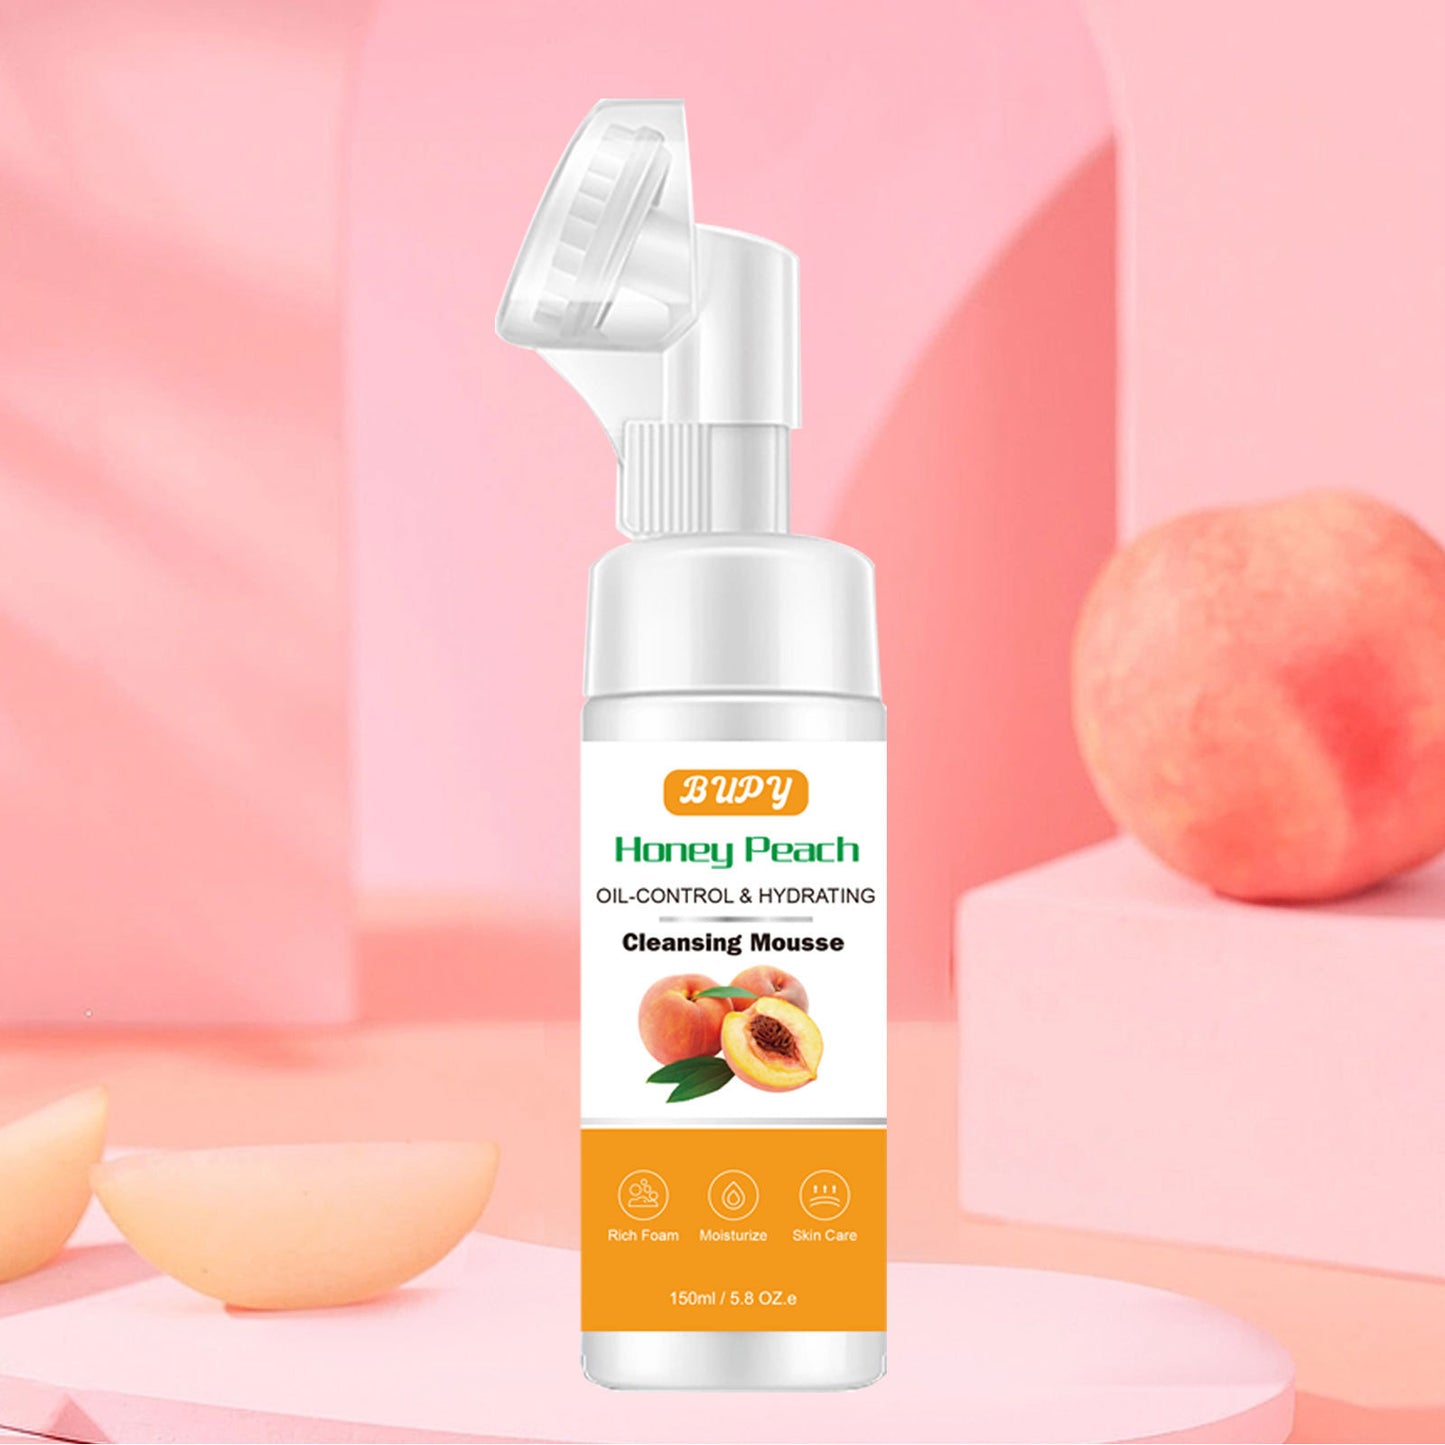 Wholesale Honey Peach Cleansing Mousse, Moisturizing, Gentle Oil Control, Facial Cleanser Manufacturer 327